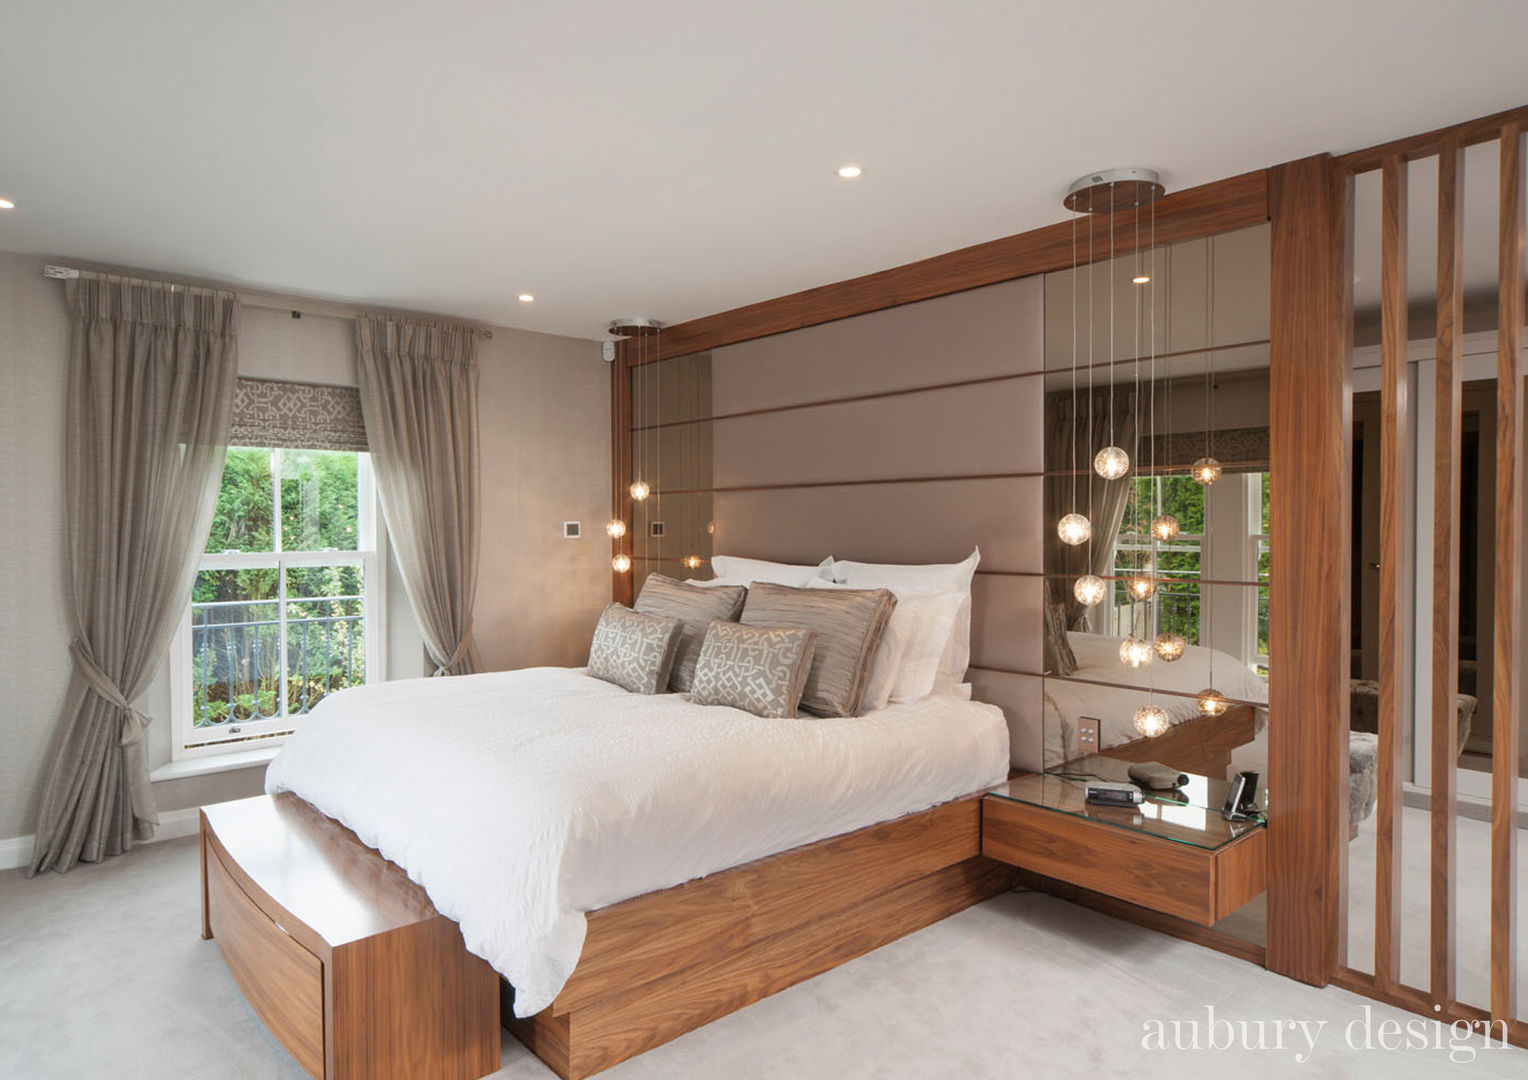 A Contemporary and Luxurious Home, Aubury Design Aubury Design Modern style bedroom